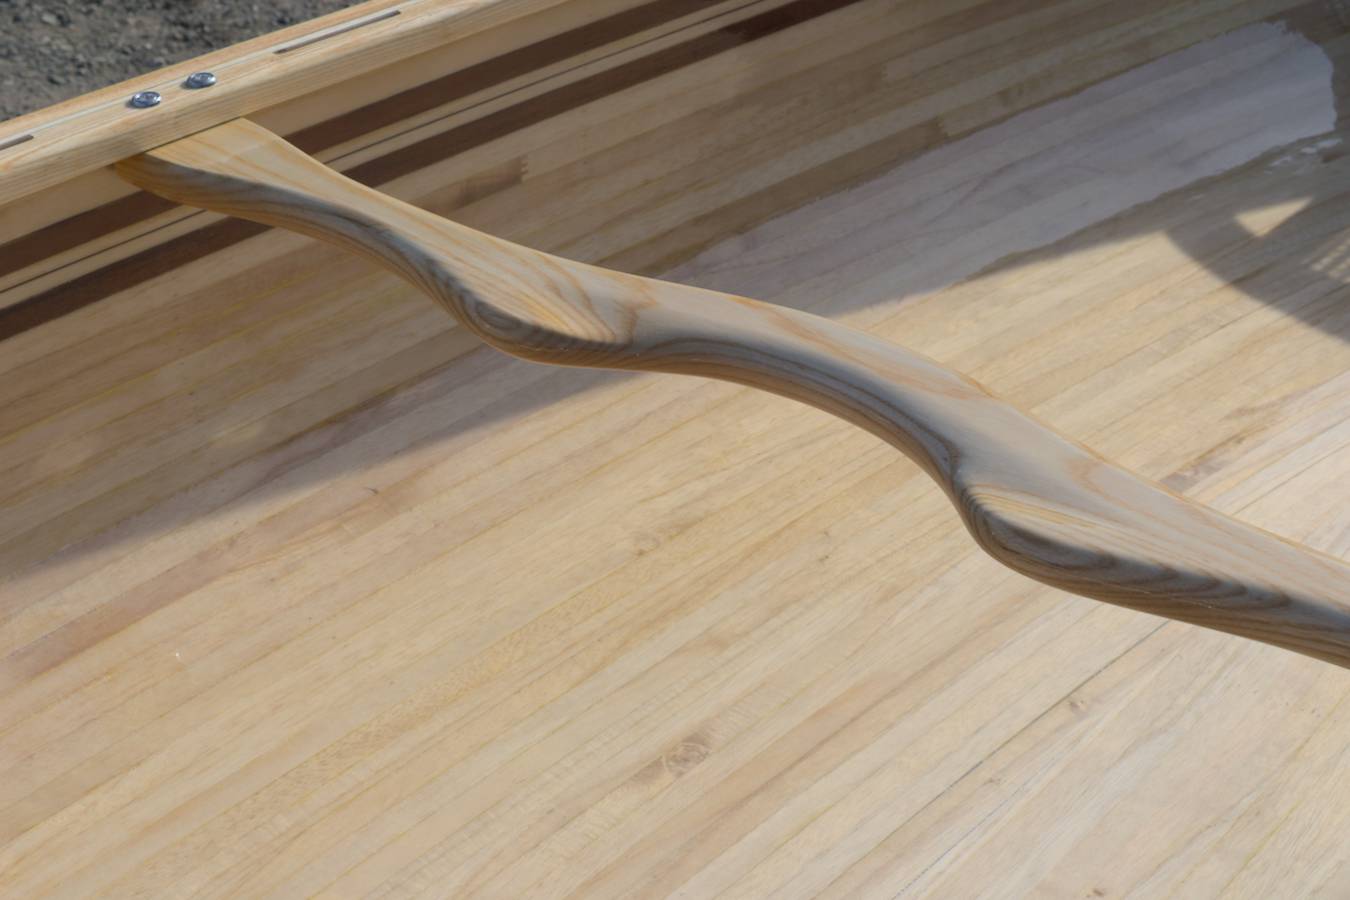 Ranger 15 wood-strip canoe - ash yoke